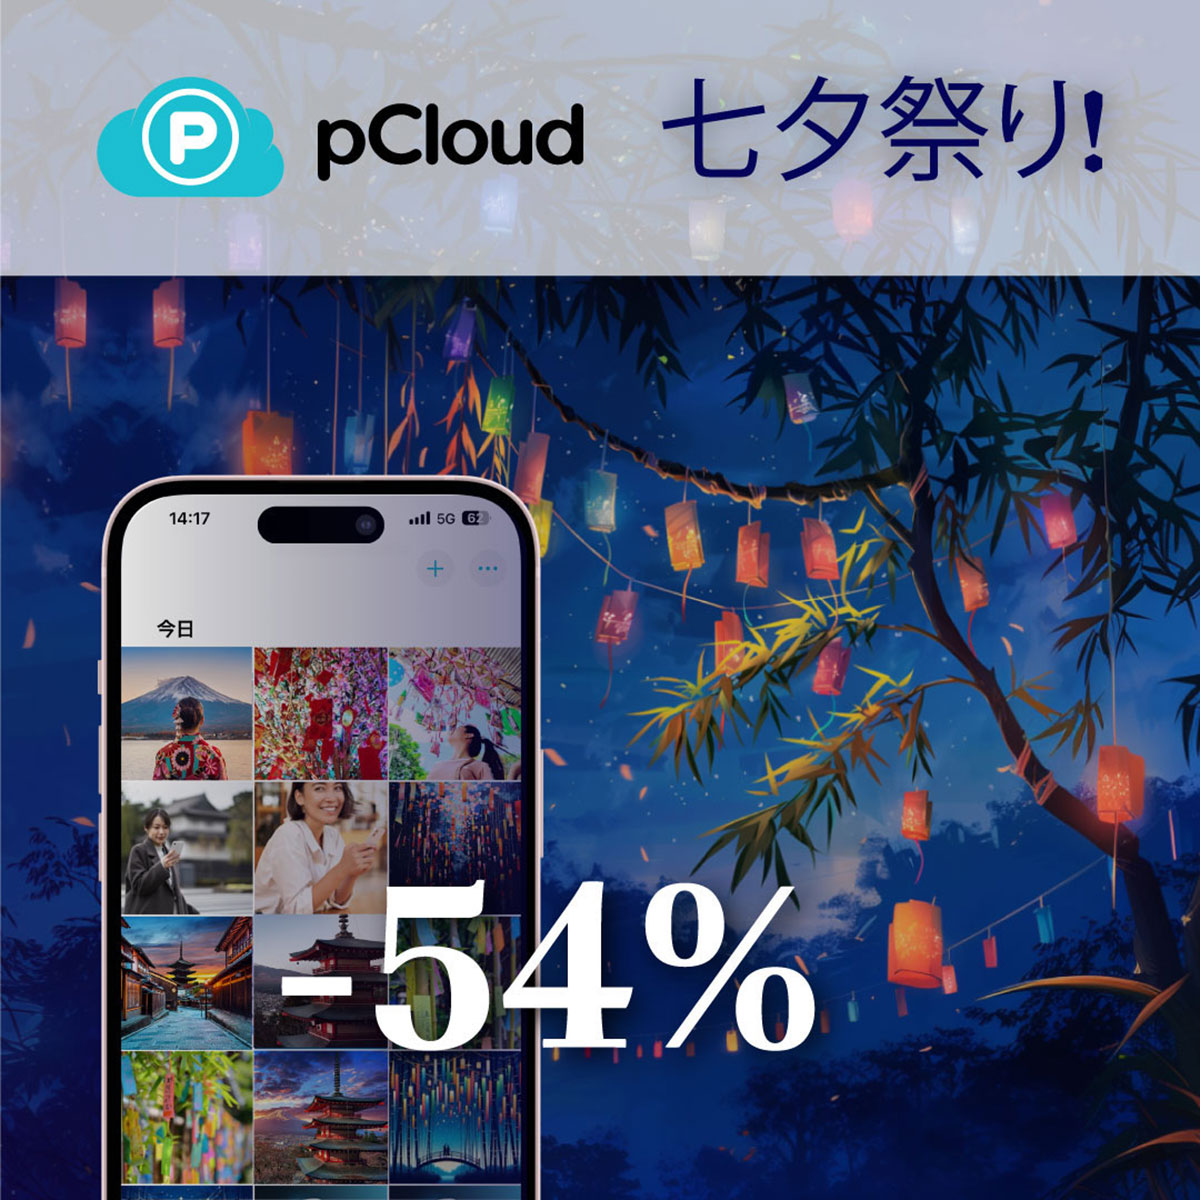 pCloud 七夕セール